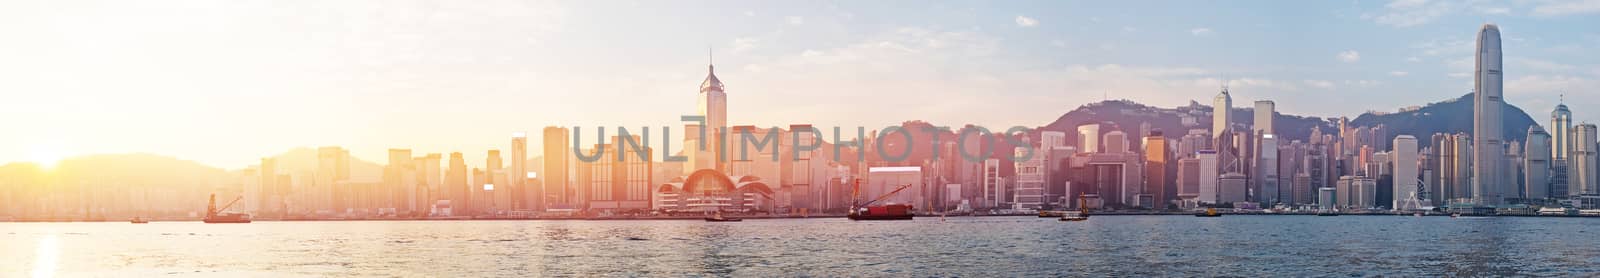 Hongkong Skyline in sunrise View Panorama by Surasak